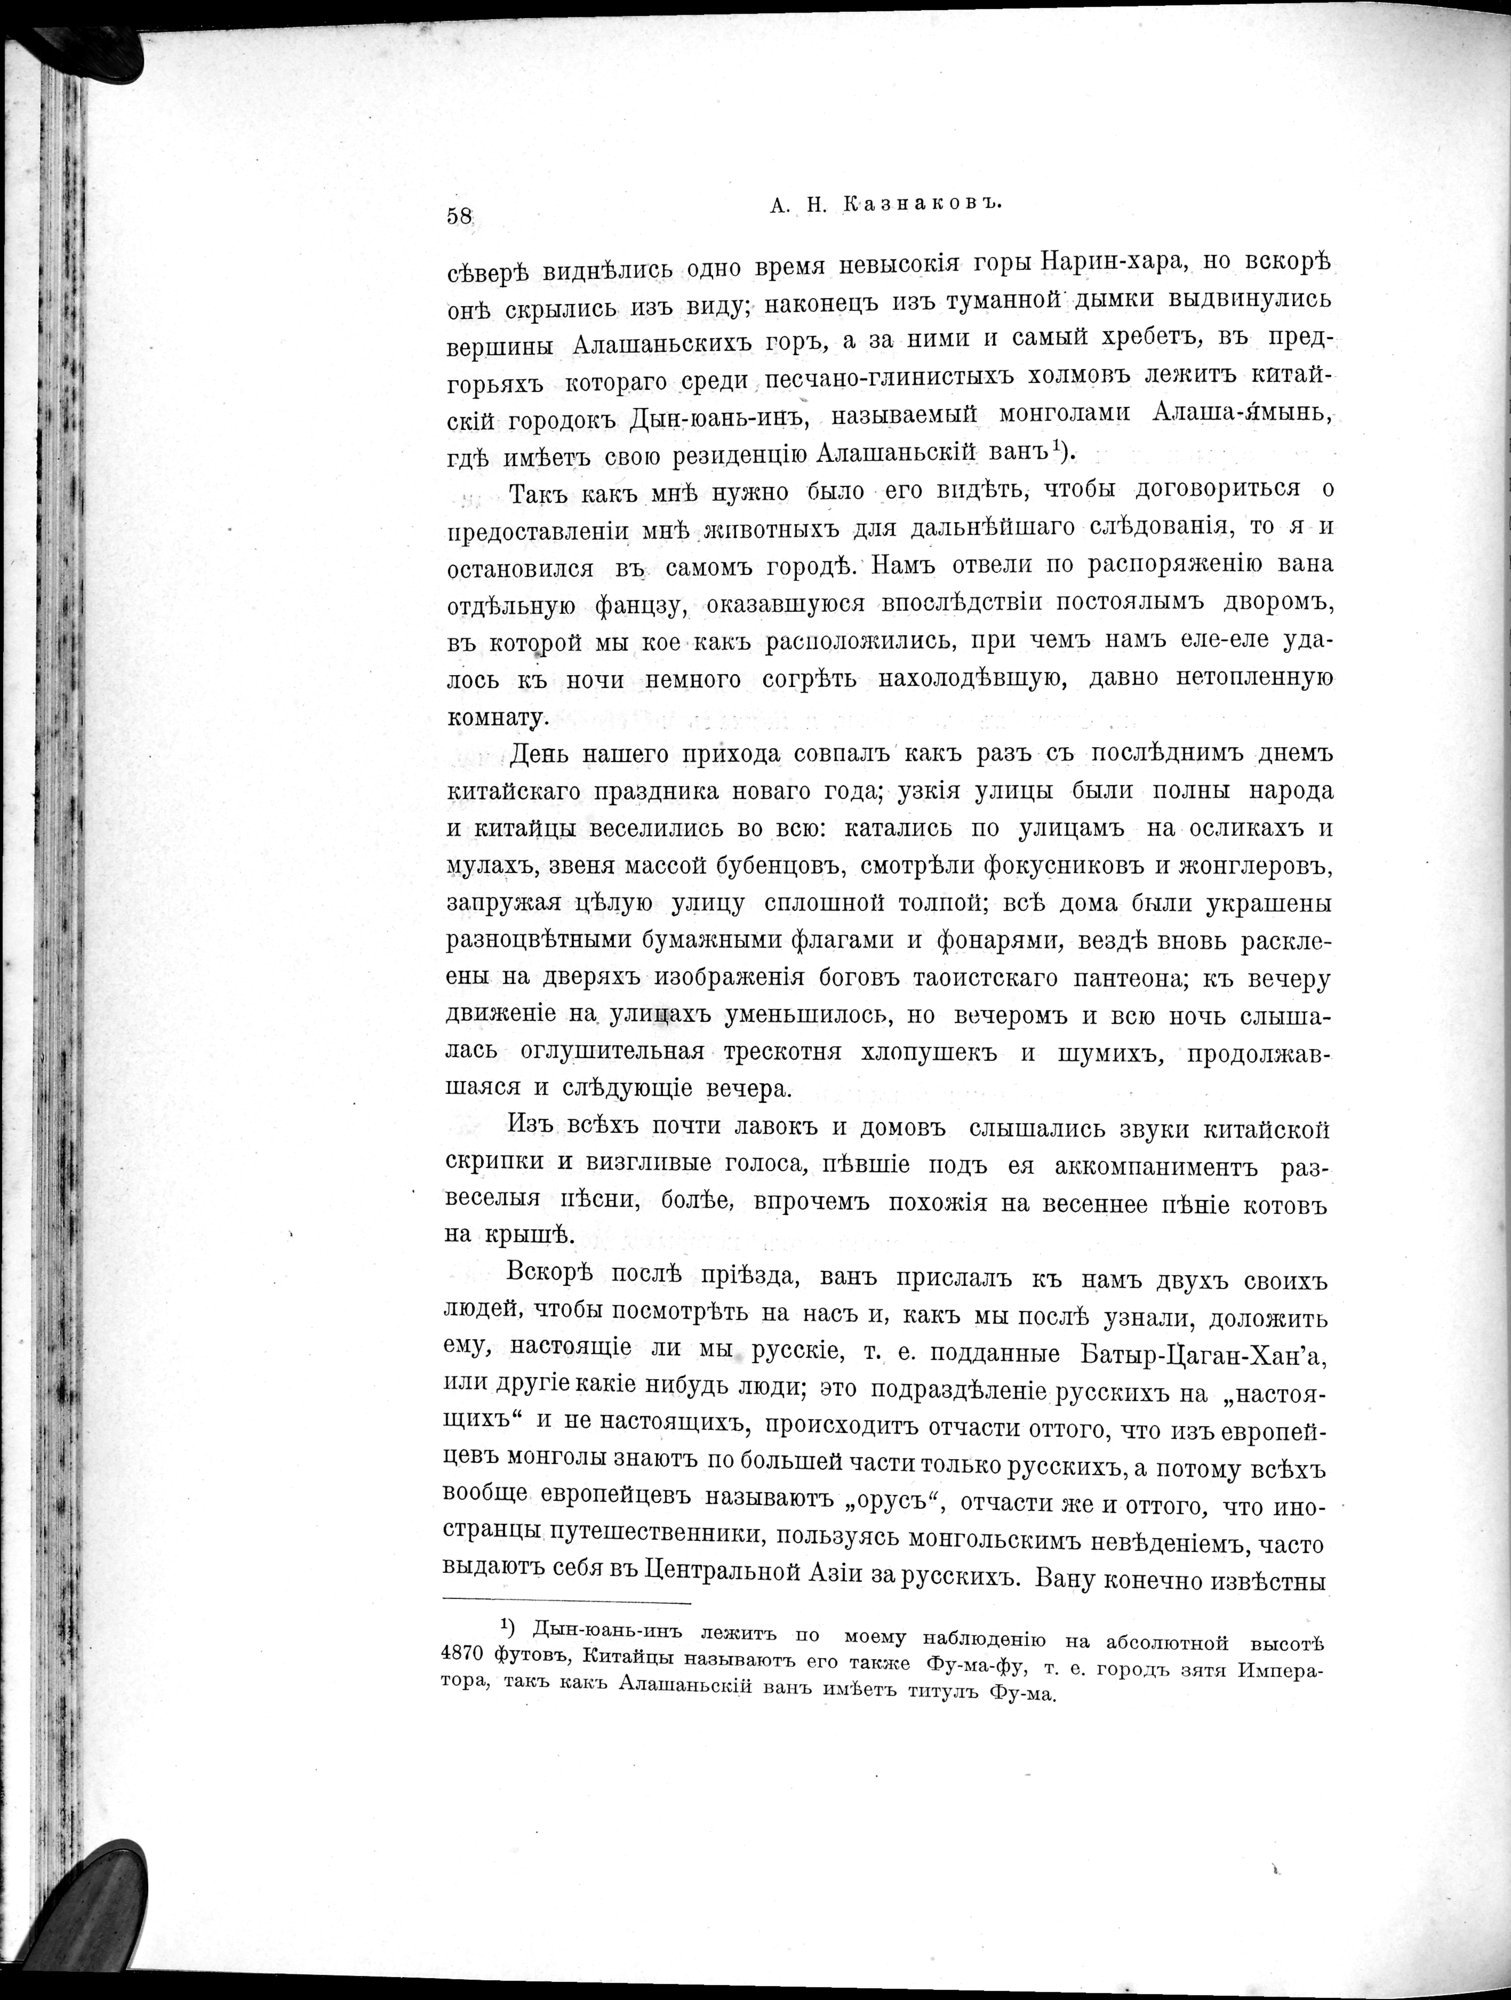 Mongoliia i Kam : vol.3 / Page 80 (Grayscale High Resolution Image)